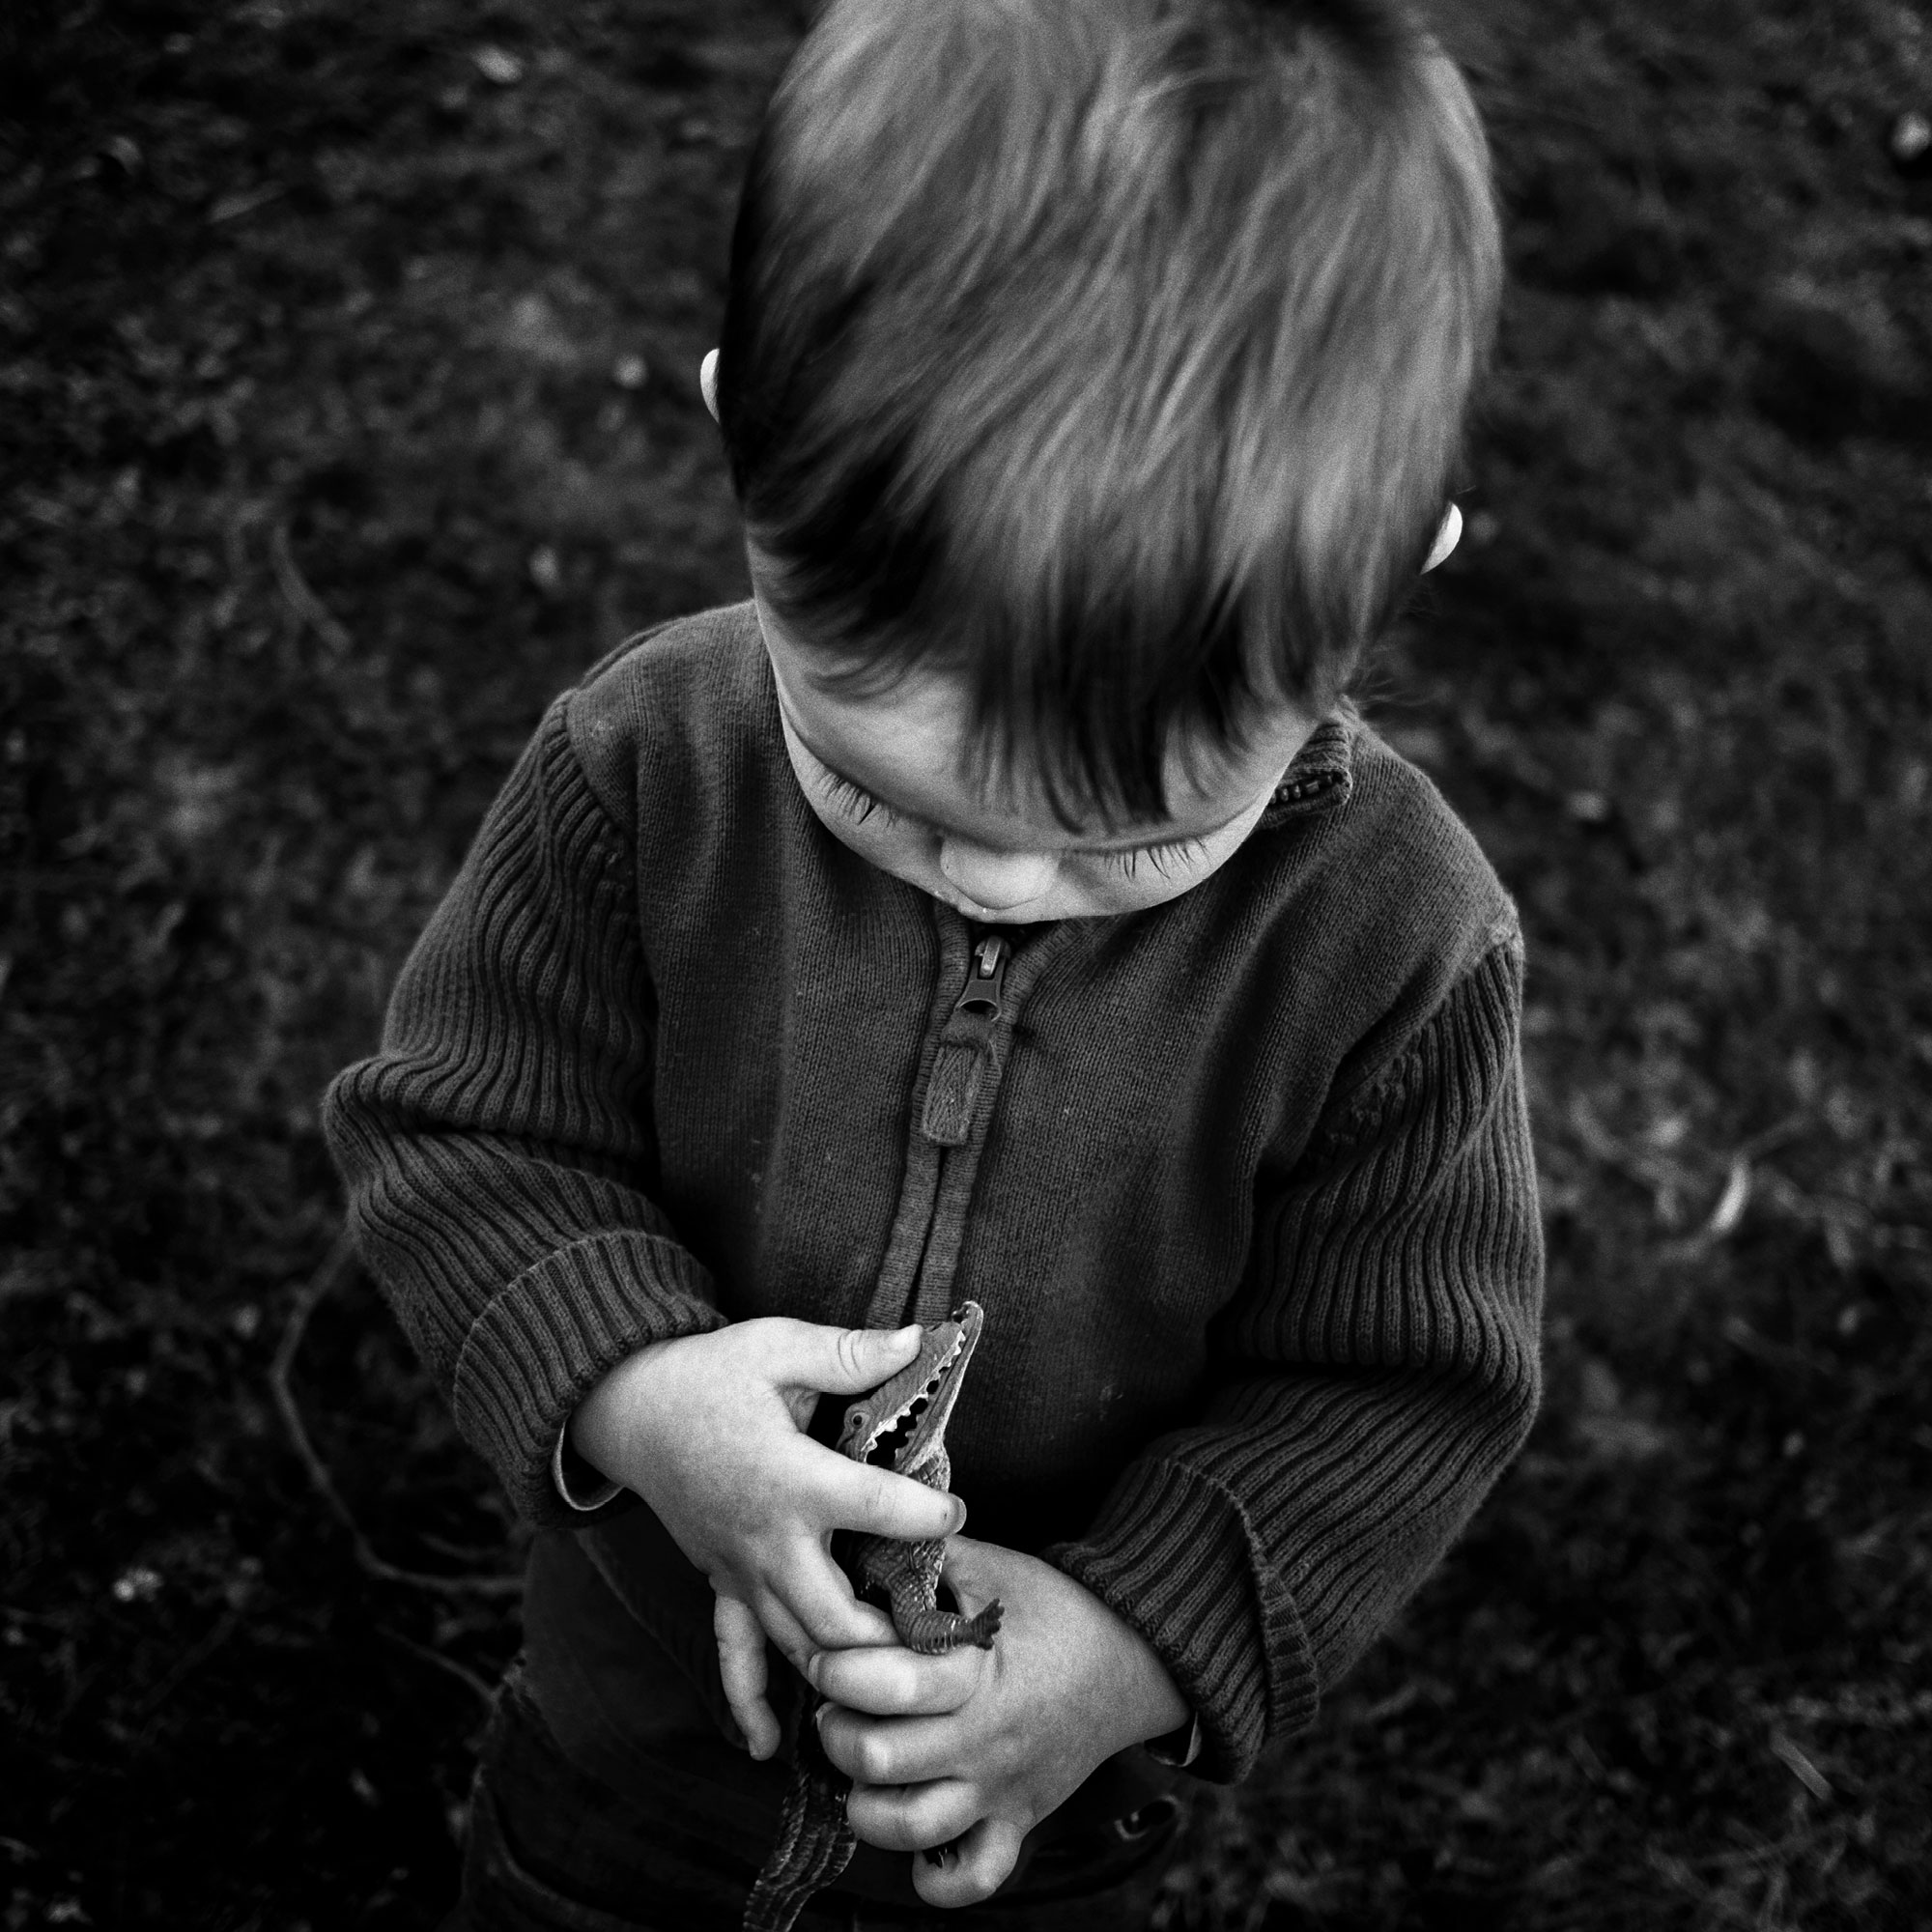 Black and White children portrait photography